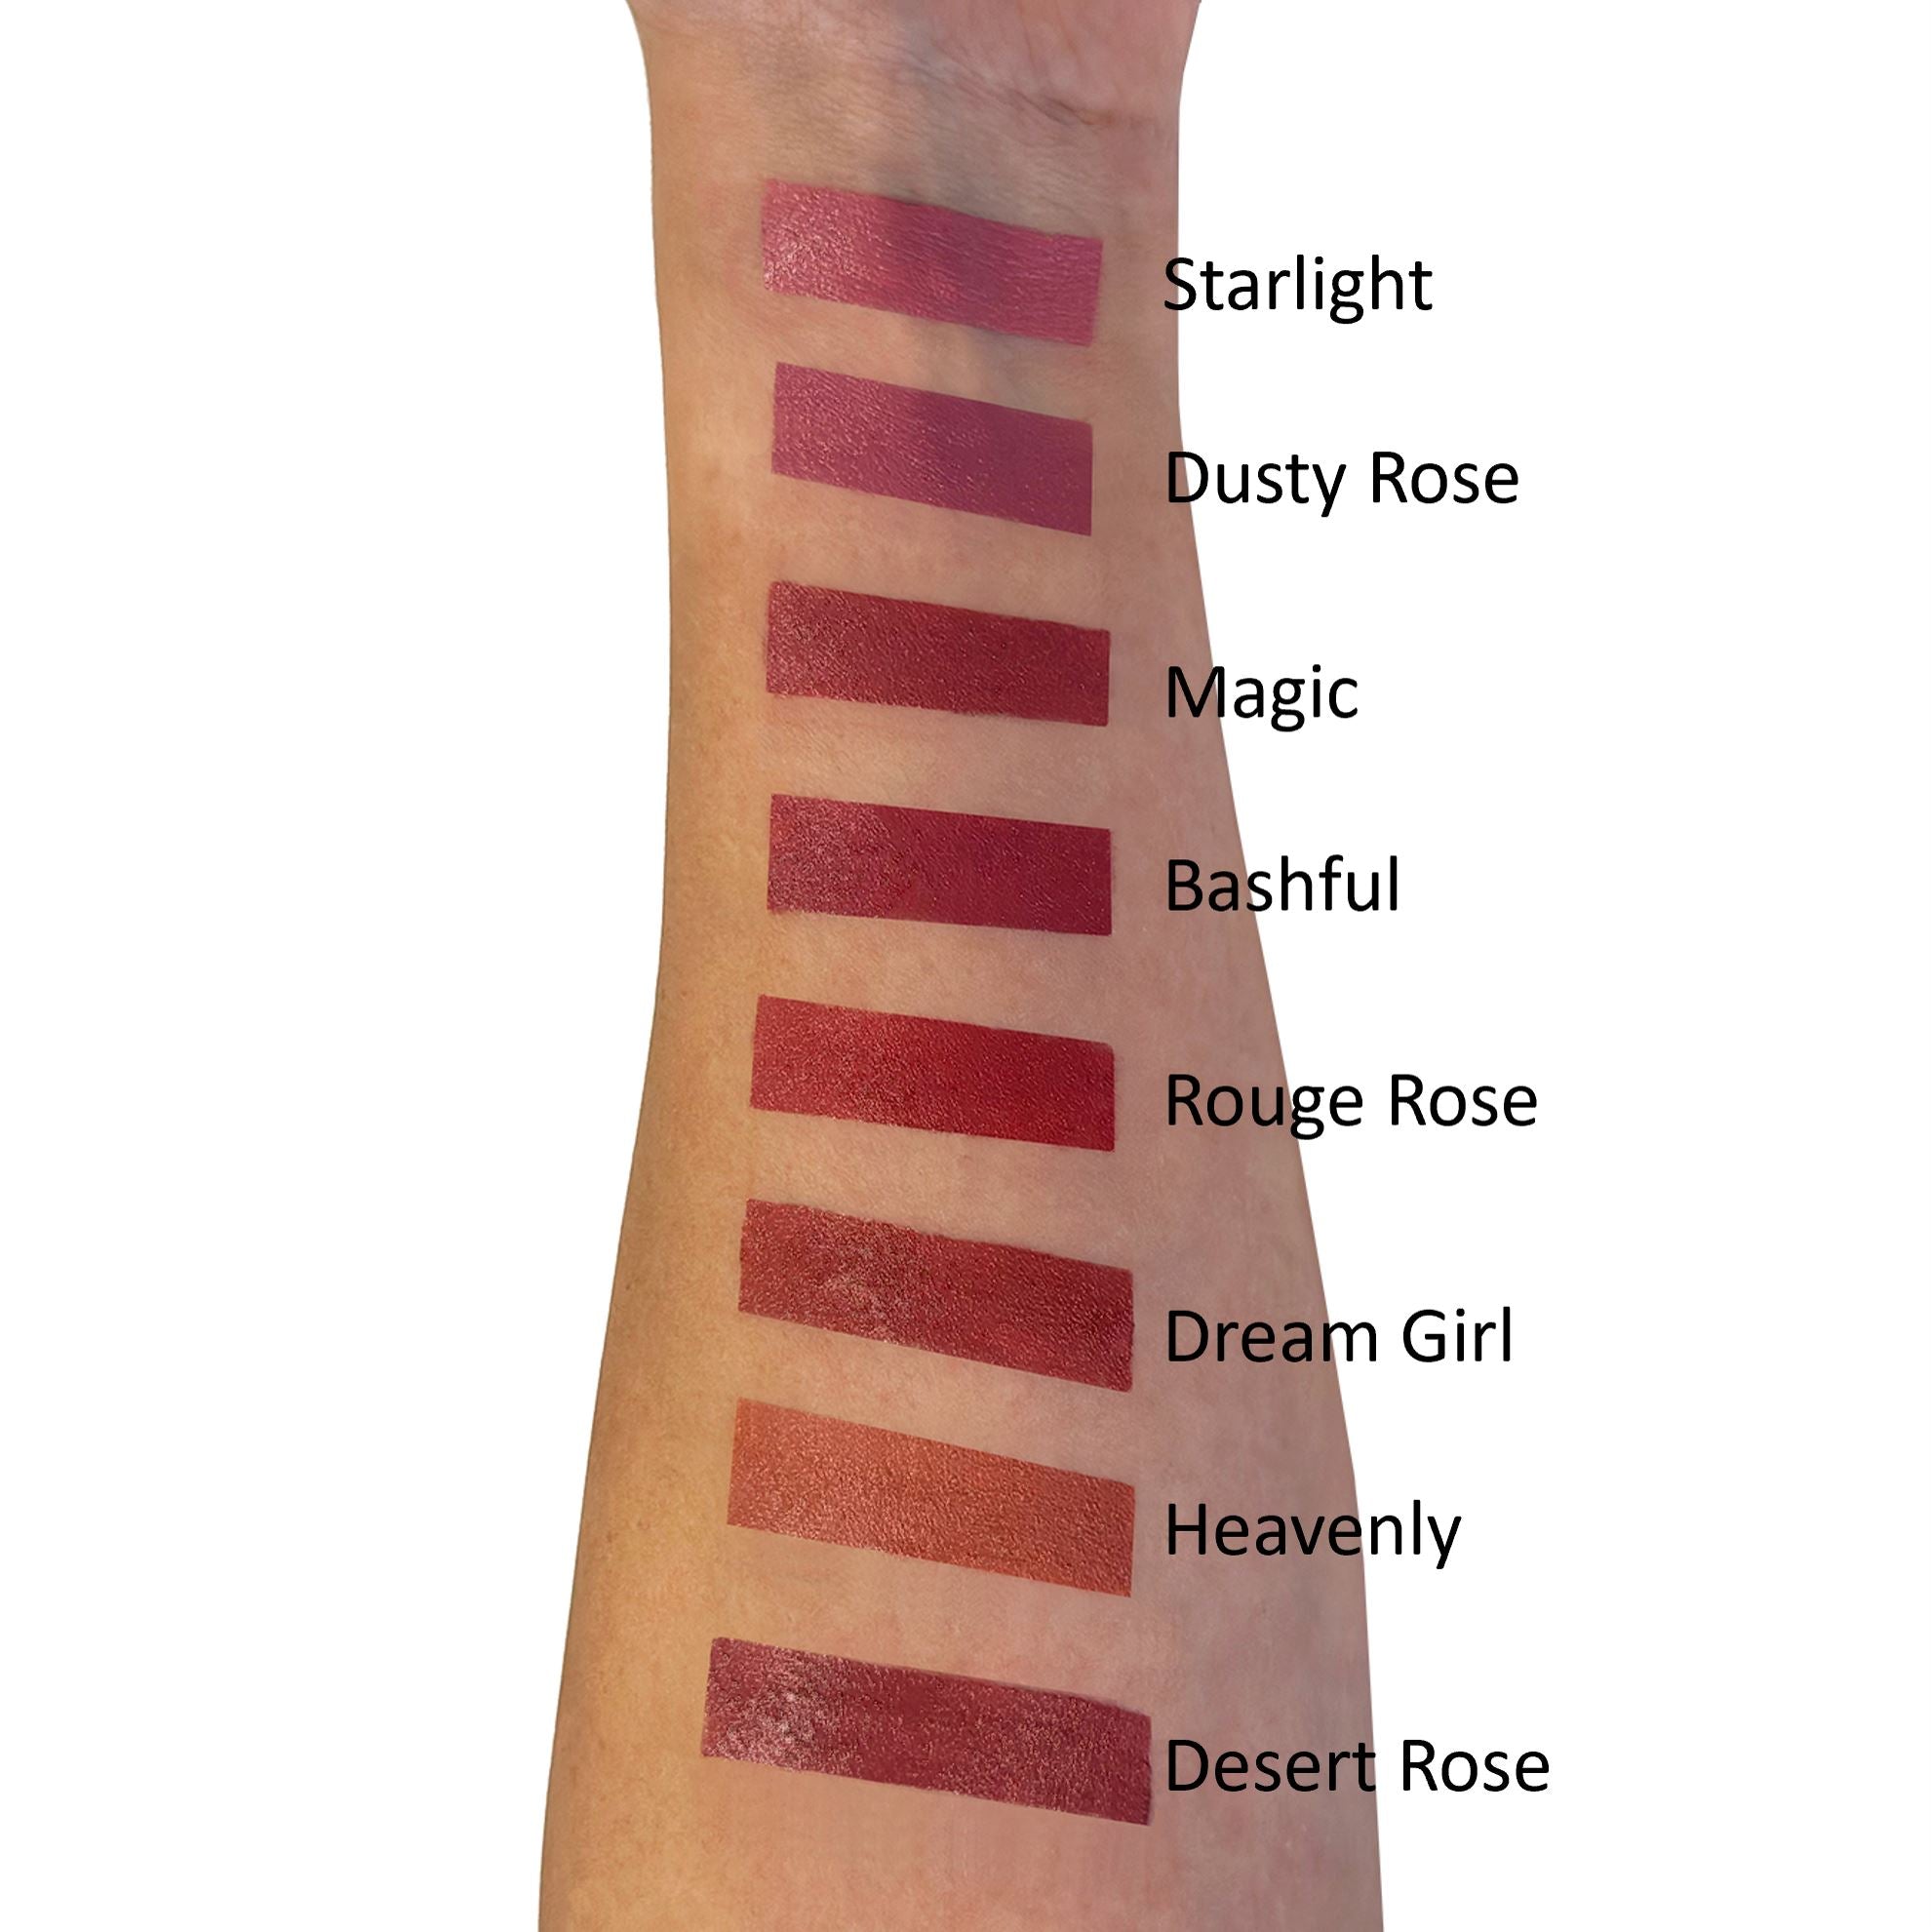 Desert Rose - Luxury Cream Lipstick Isabella Grace Best Moisturizing Lipstick Pro-Age Proage Older natural